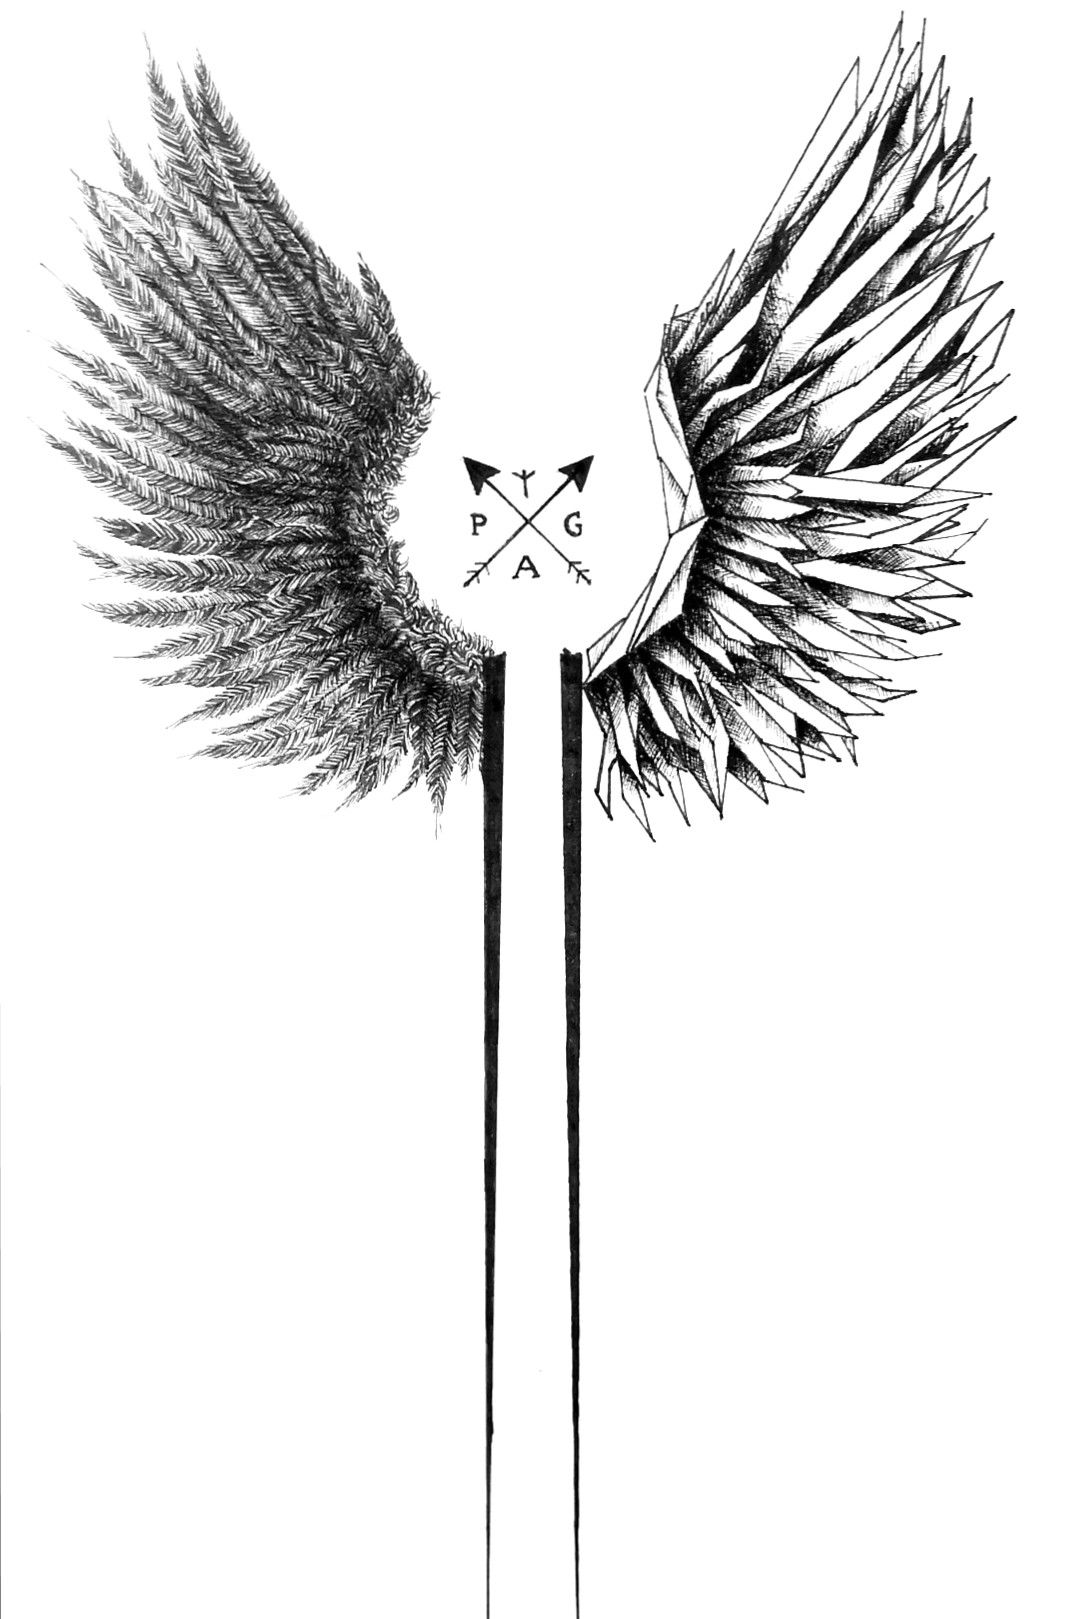 valkyrie wing tattoo designs